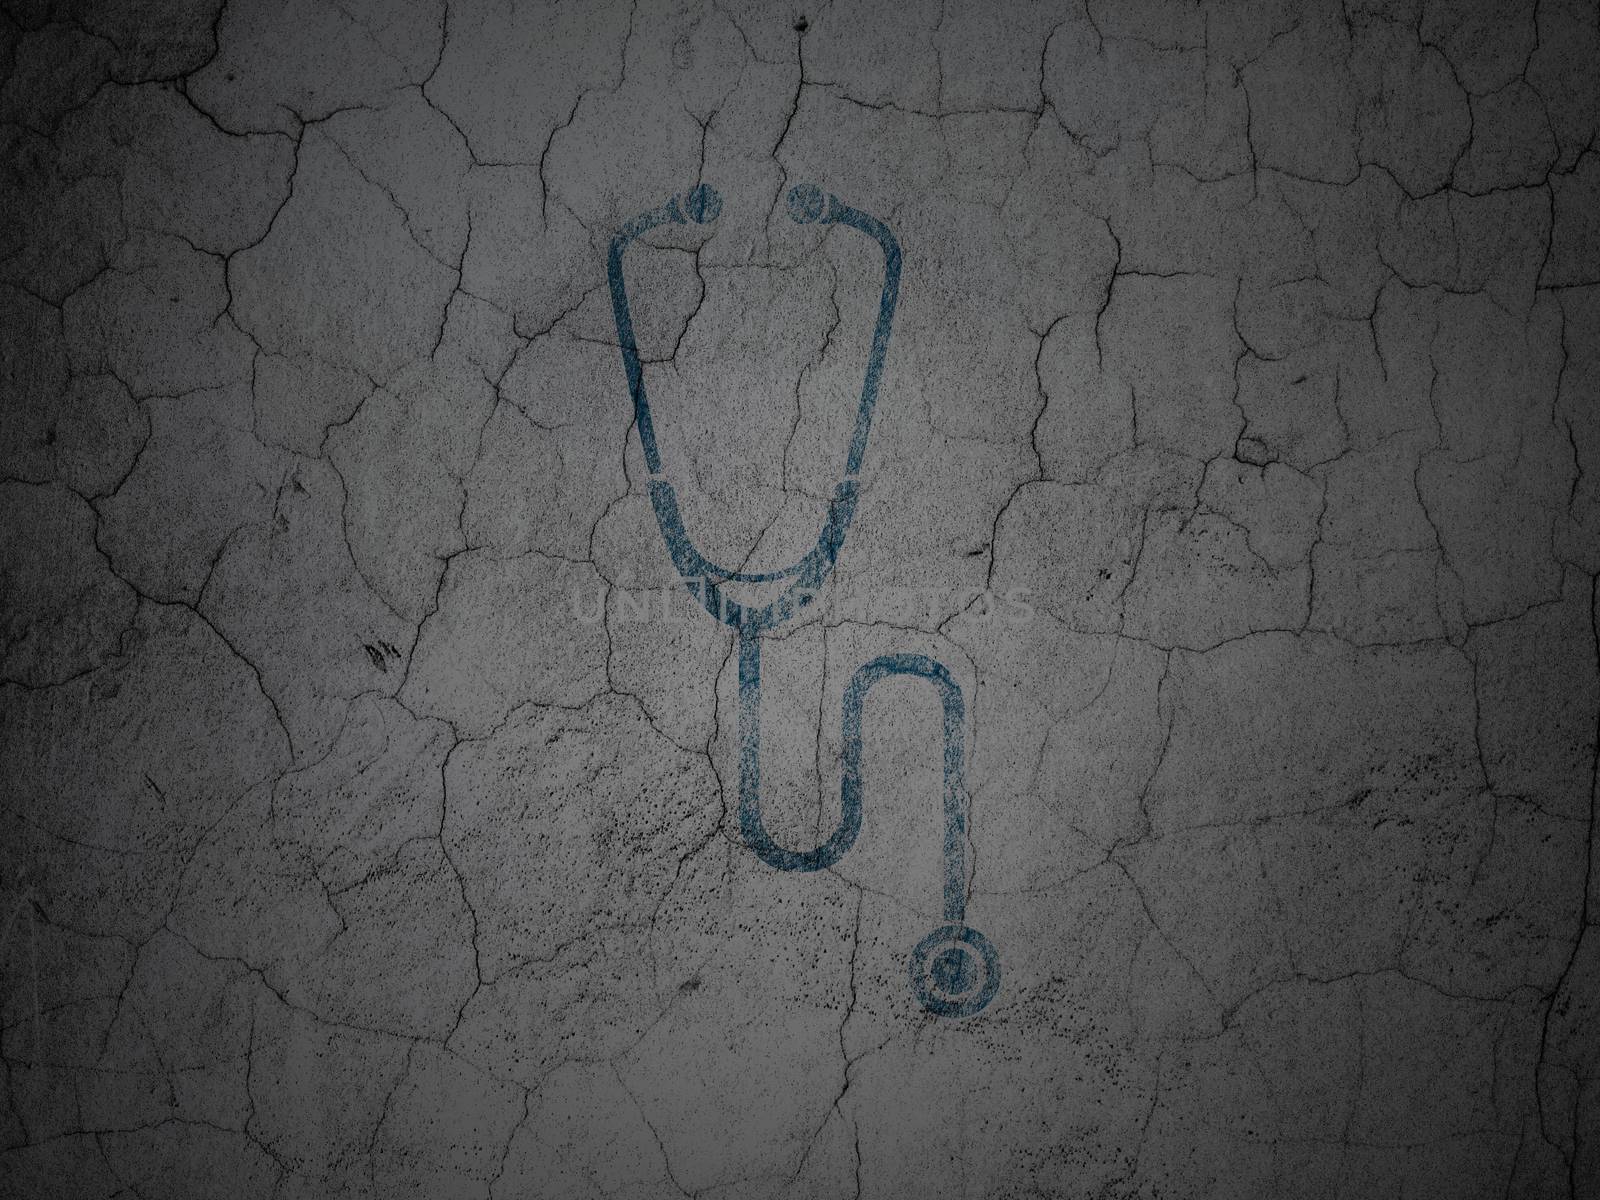 Medicine concept: Blue Stethoscope on grunge textured concrete wall background